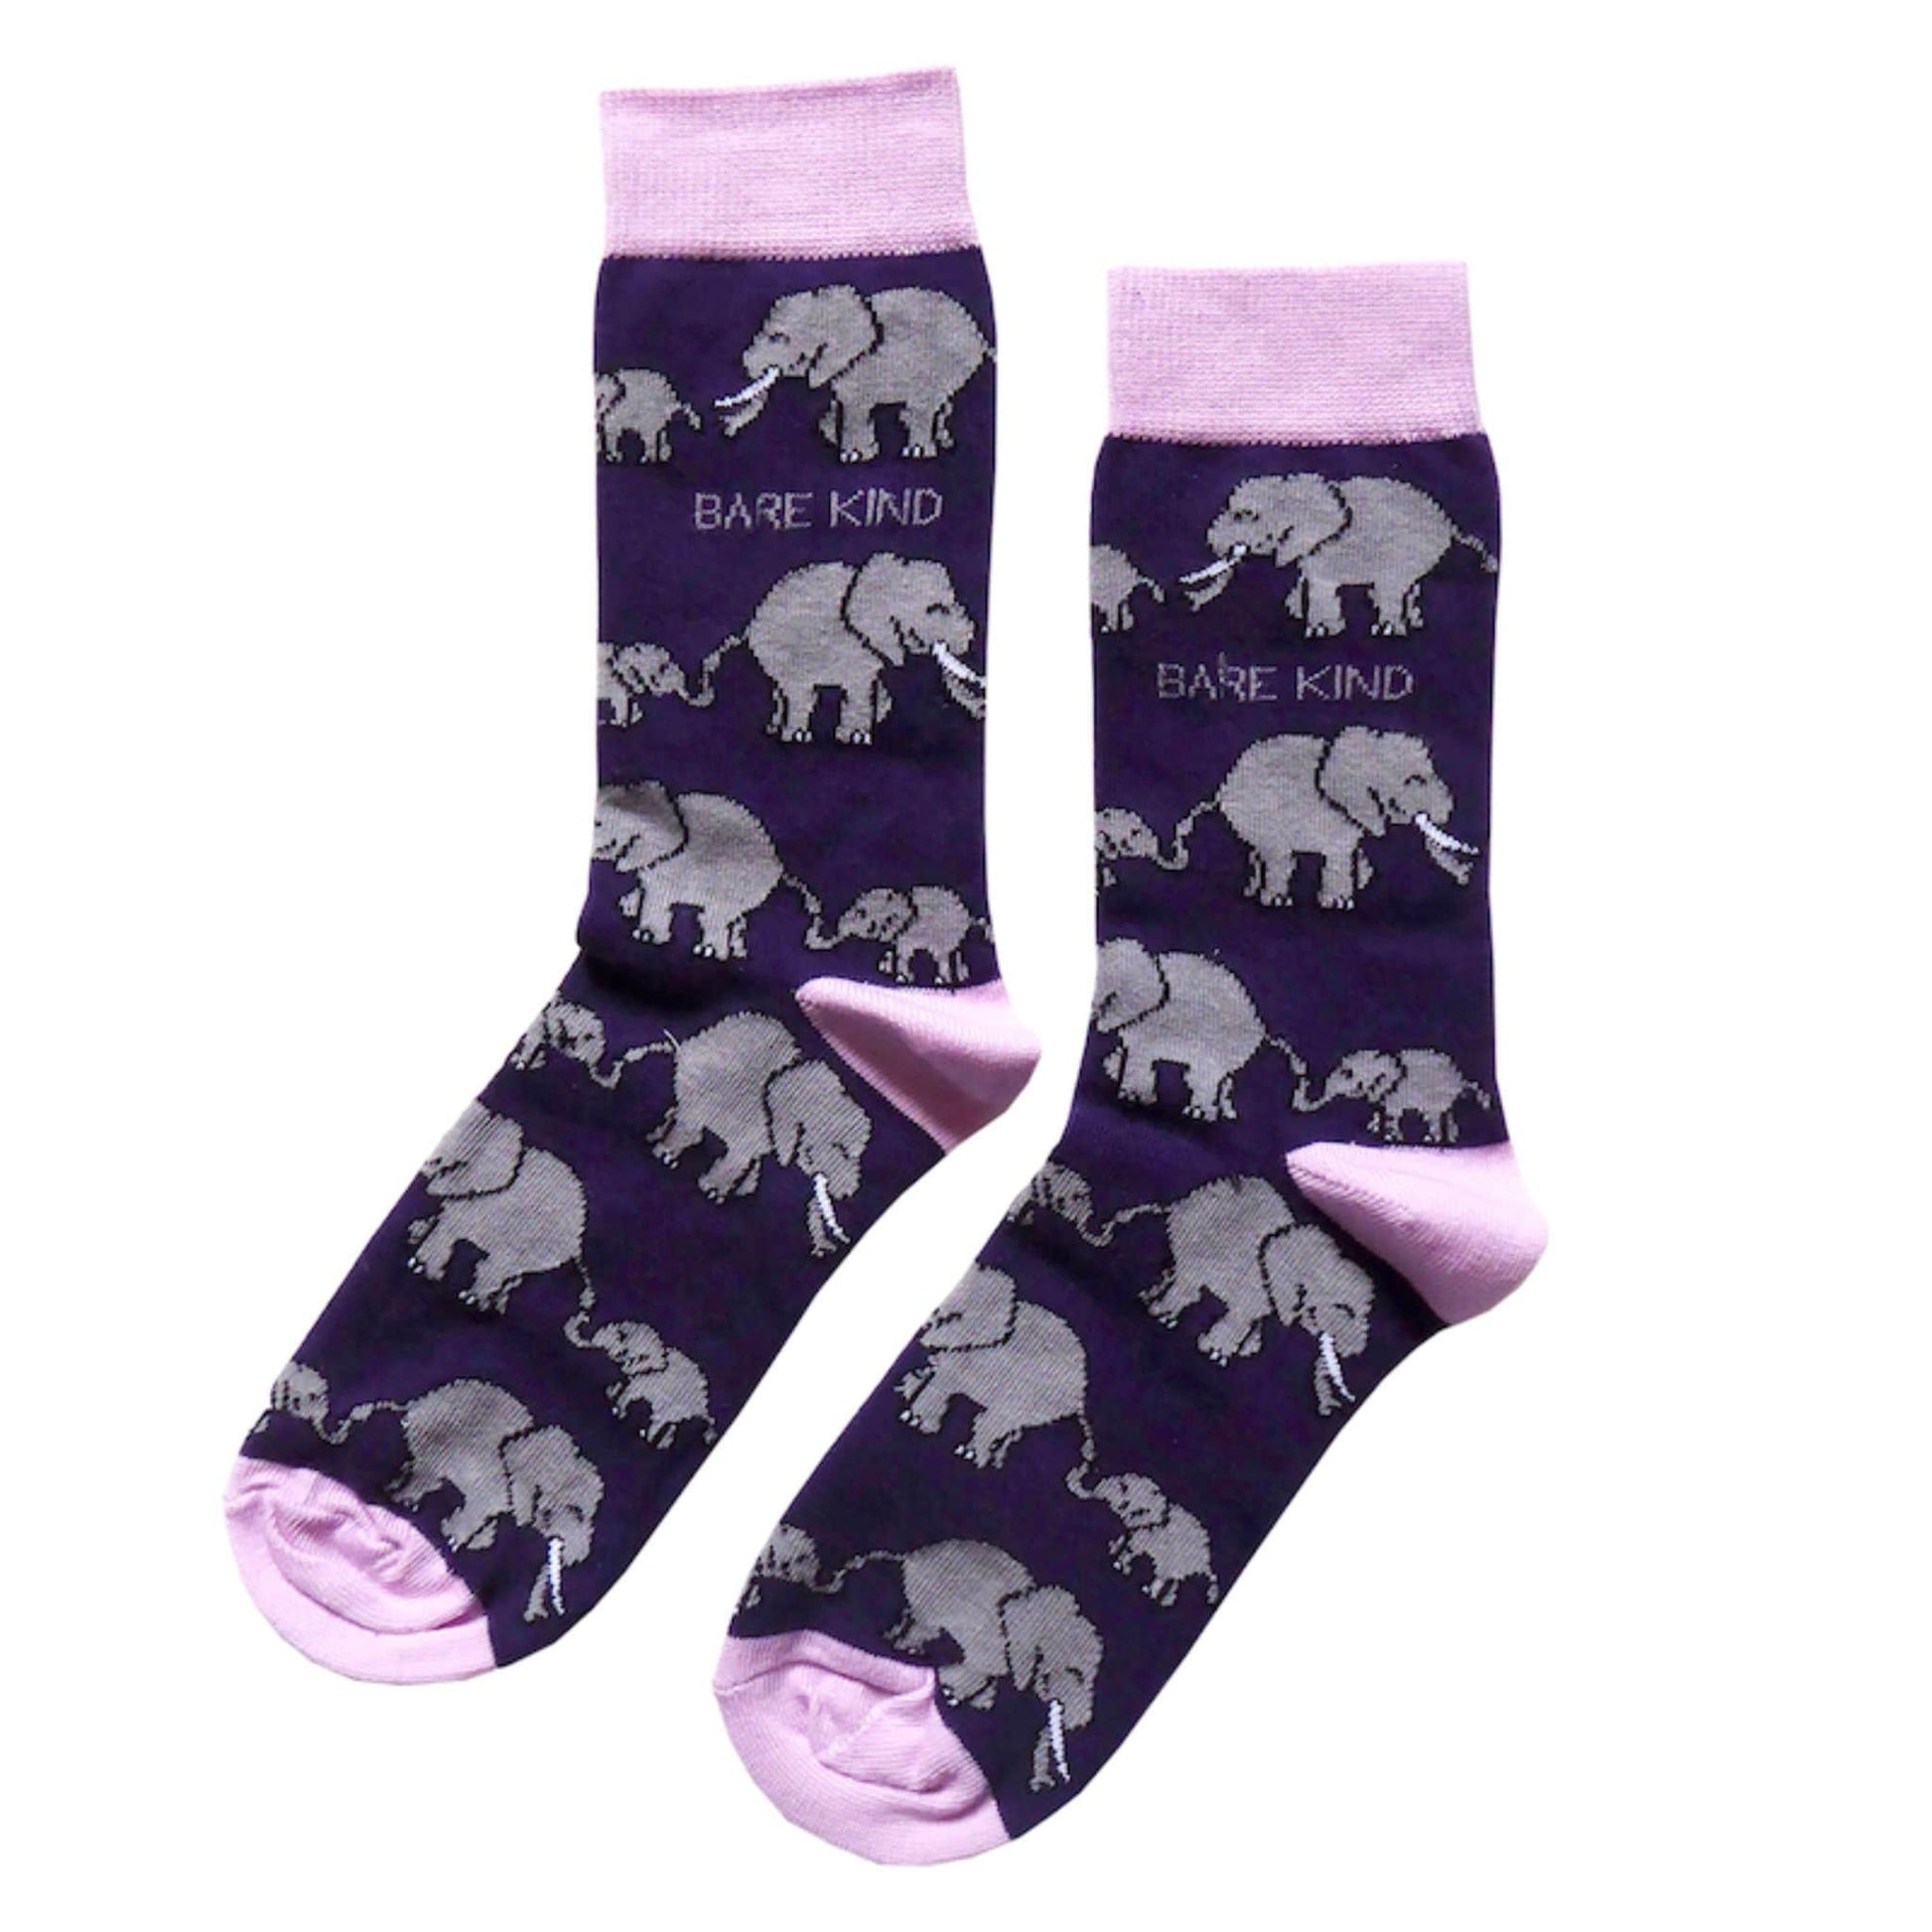 Elephant Socks That Help Elephant Conservation - Bamboo Socks in 2 Adult Sizes